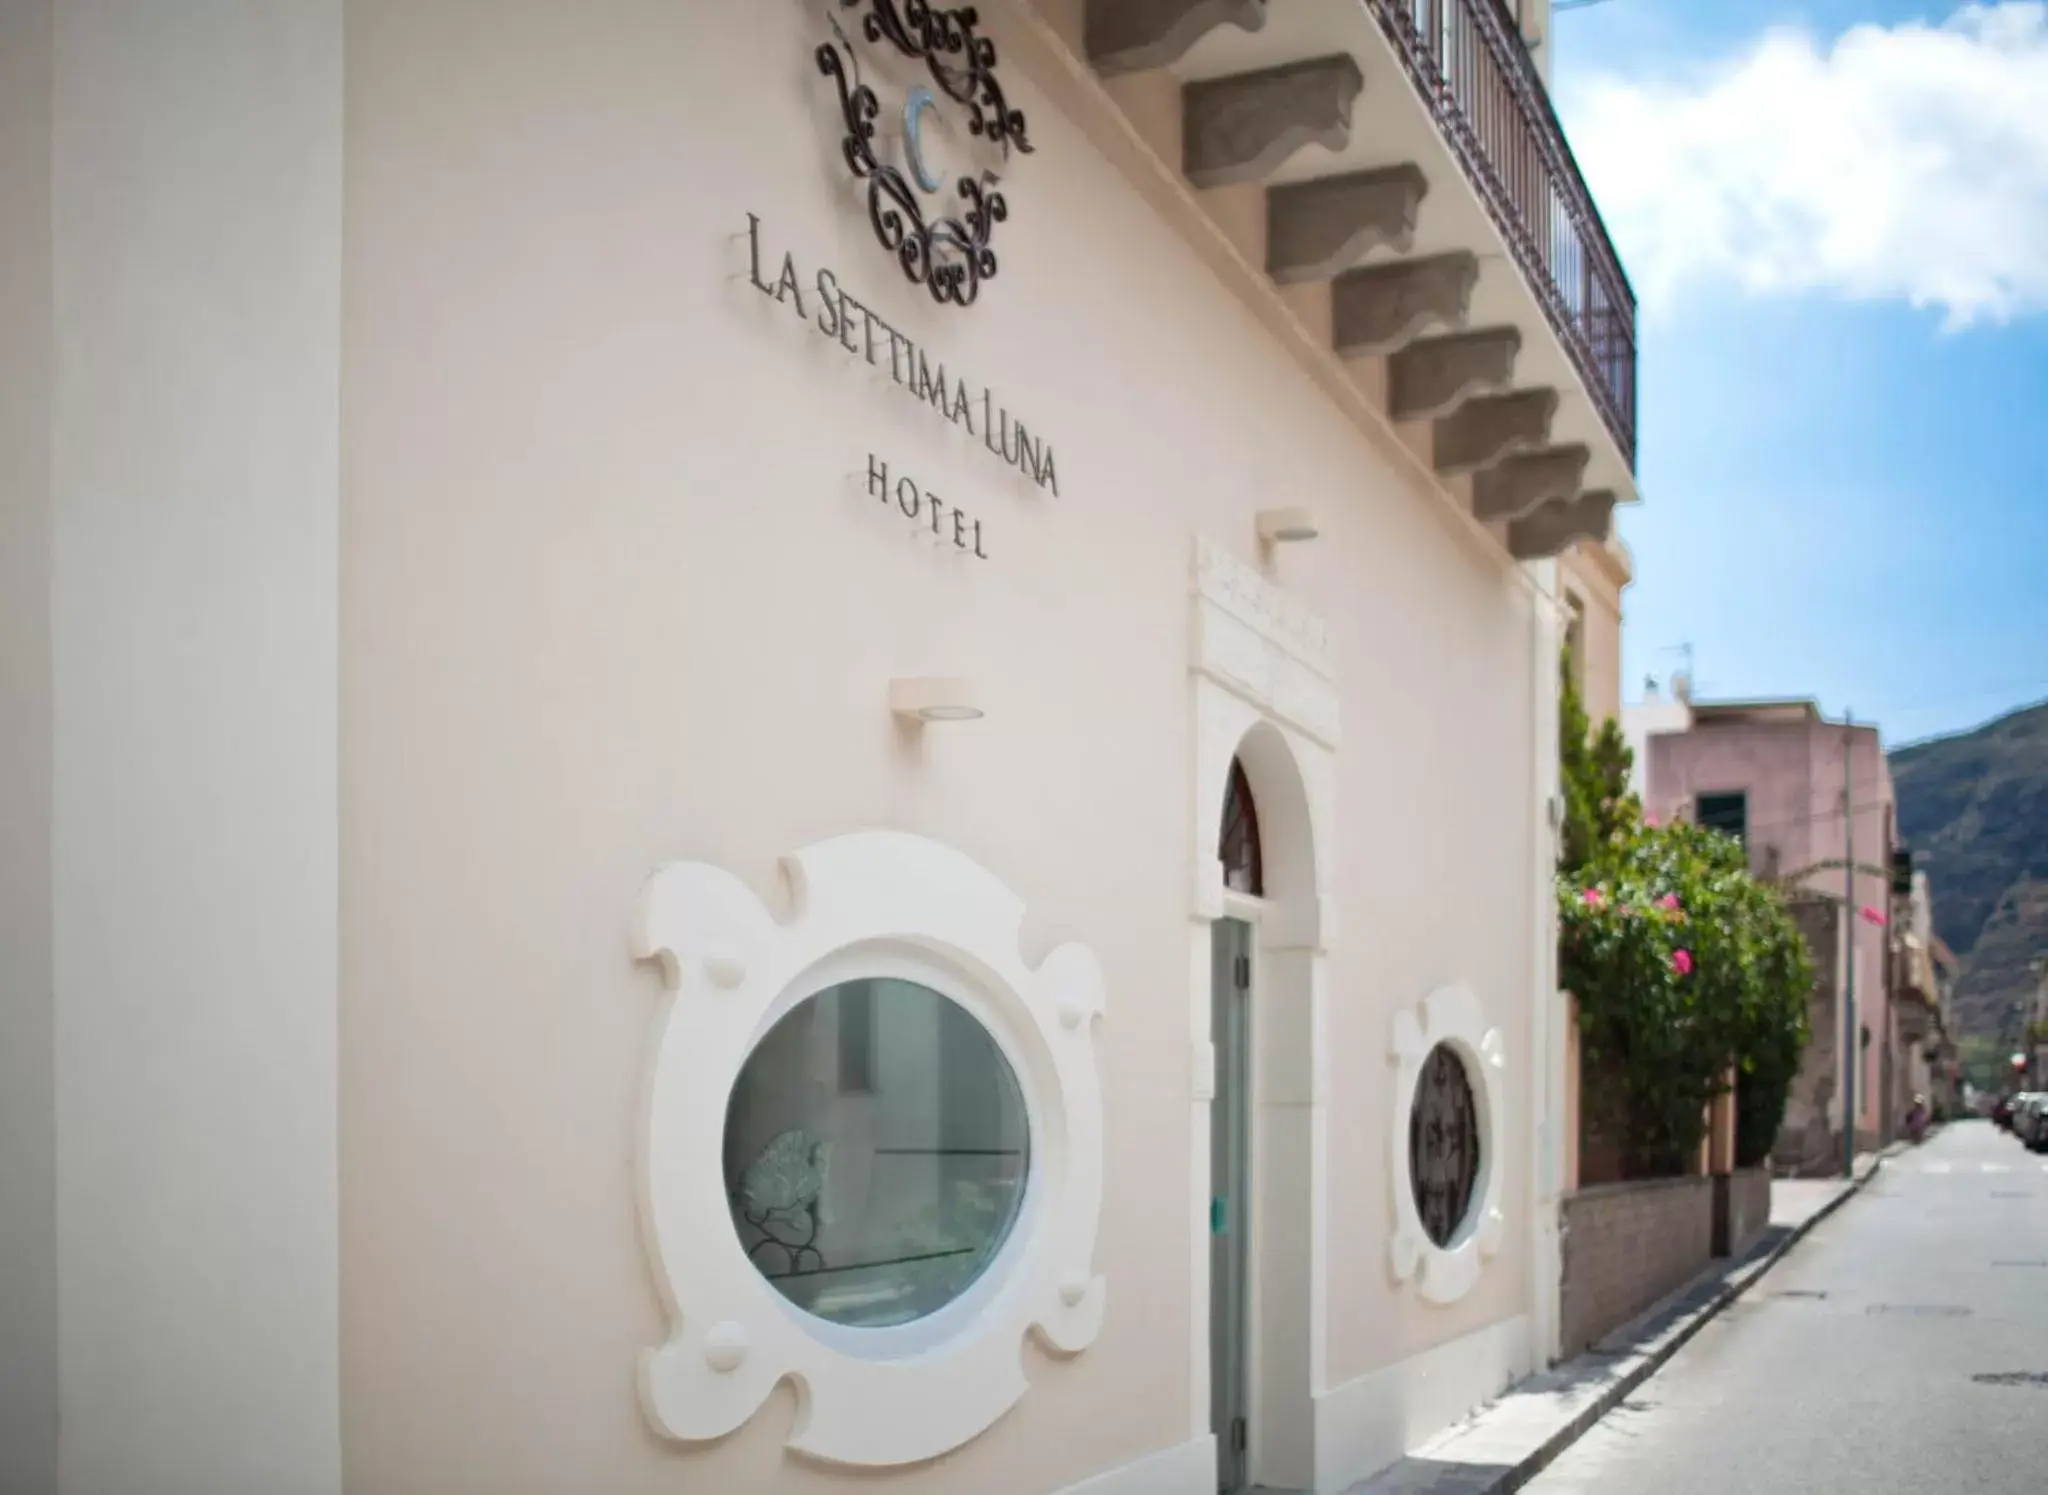 Facade/entrance, Property Building in La Settima Luna Hotel